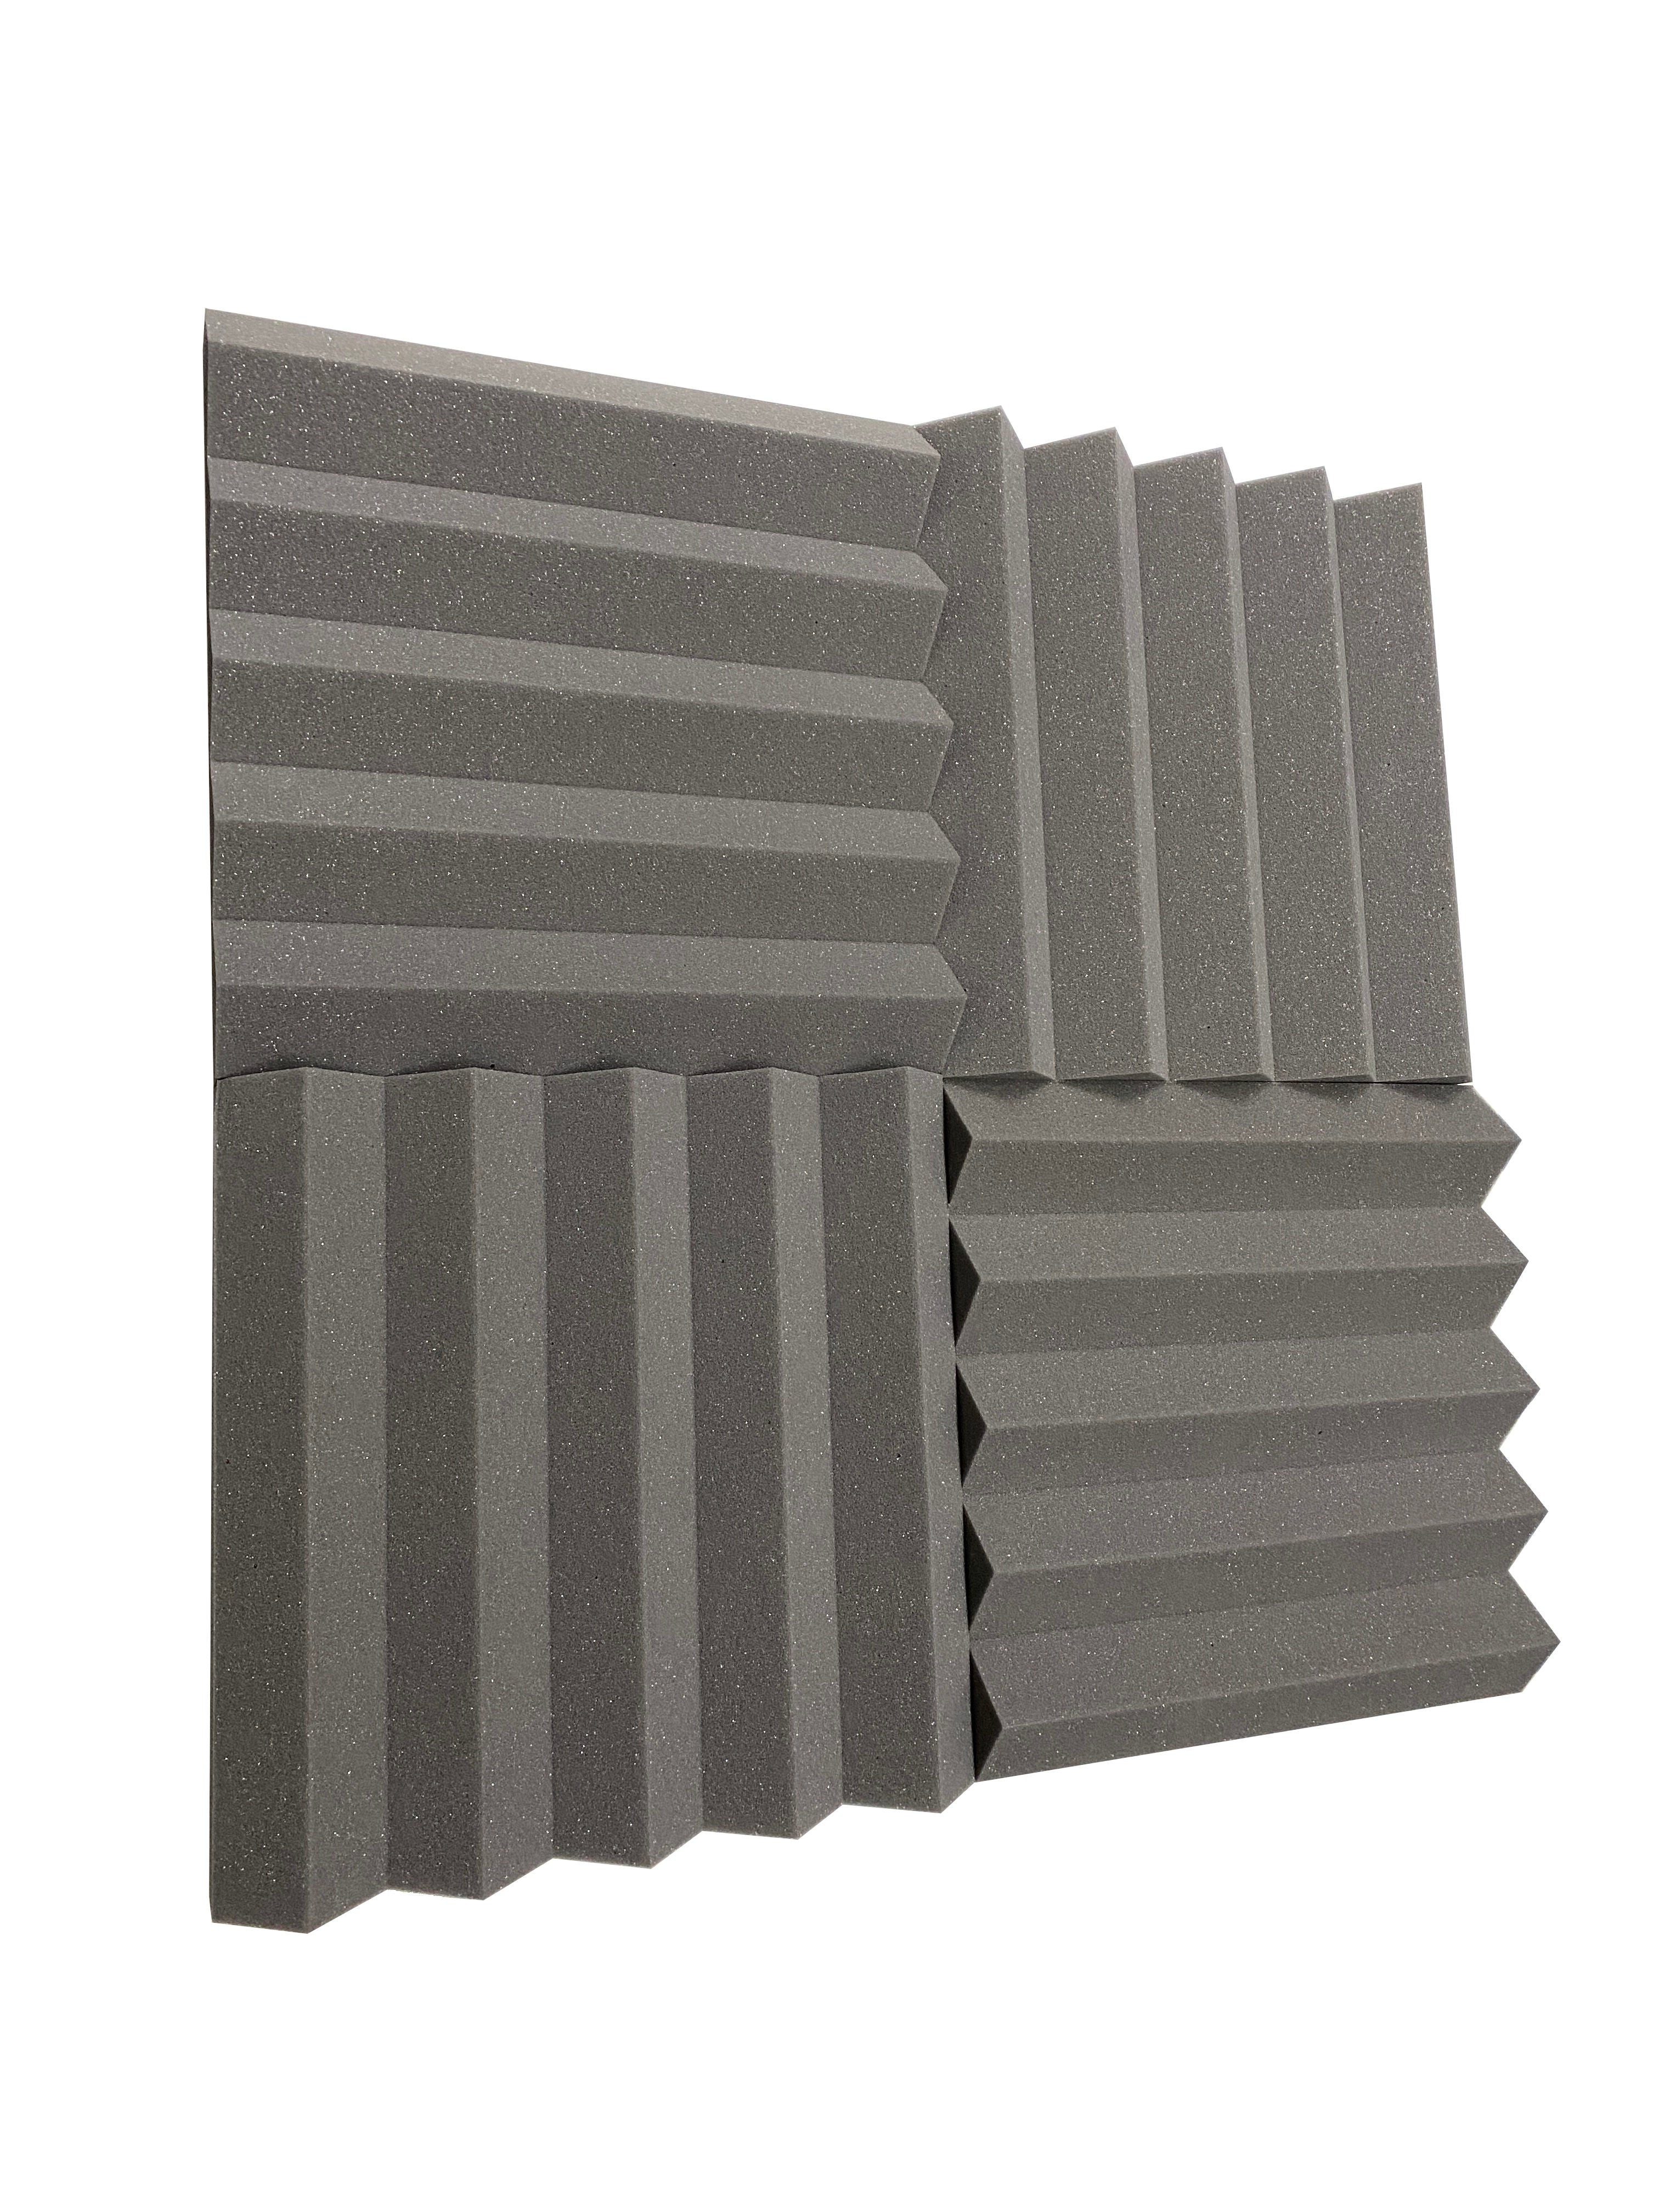 Kaufen mittelgrau Wedge PRO Combo Acoustic Studio Foam Tile Kit – 42 Fliesen, 13,92 m² Abdeckung